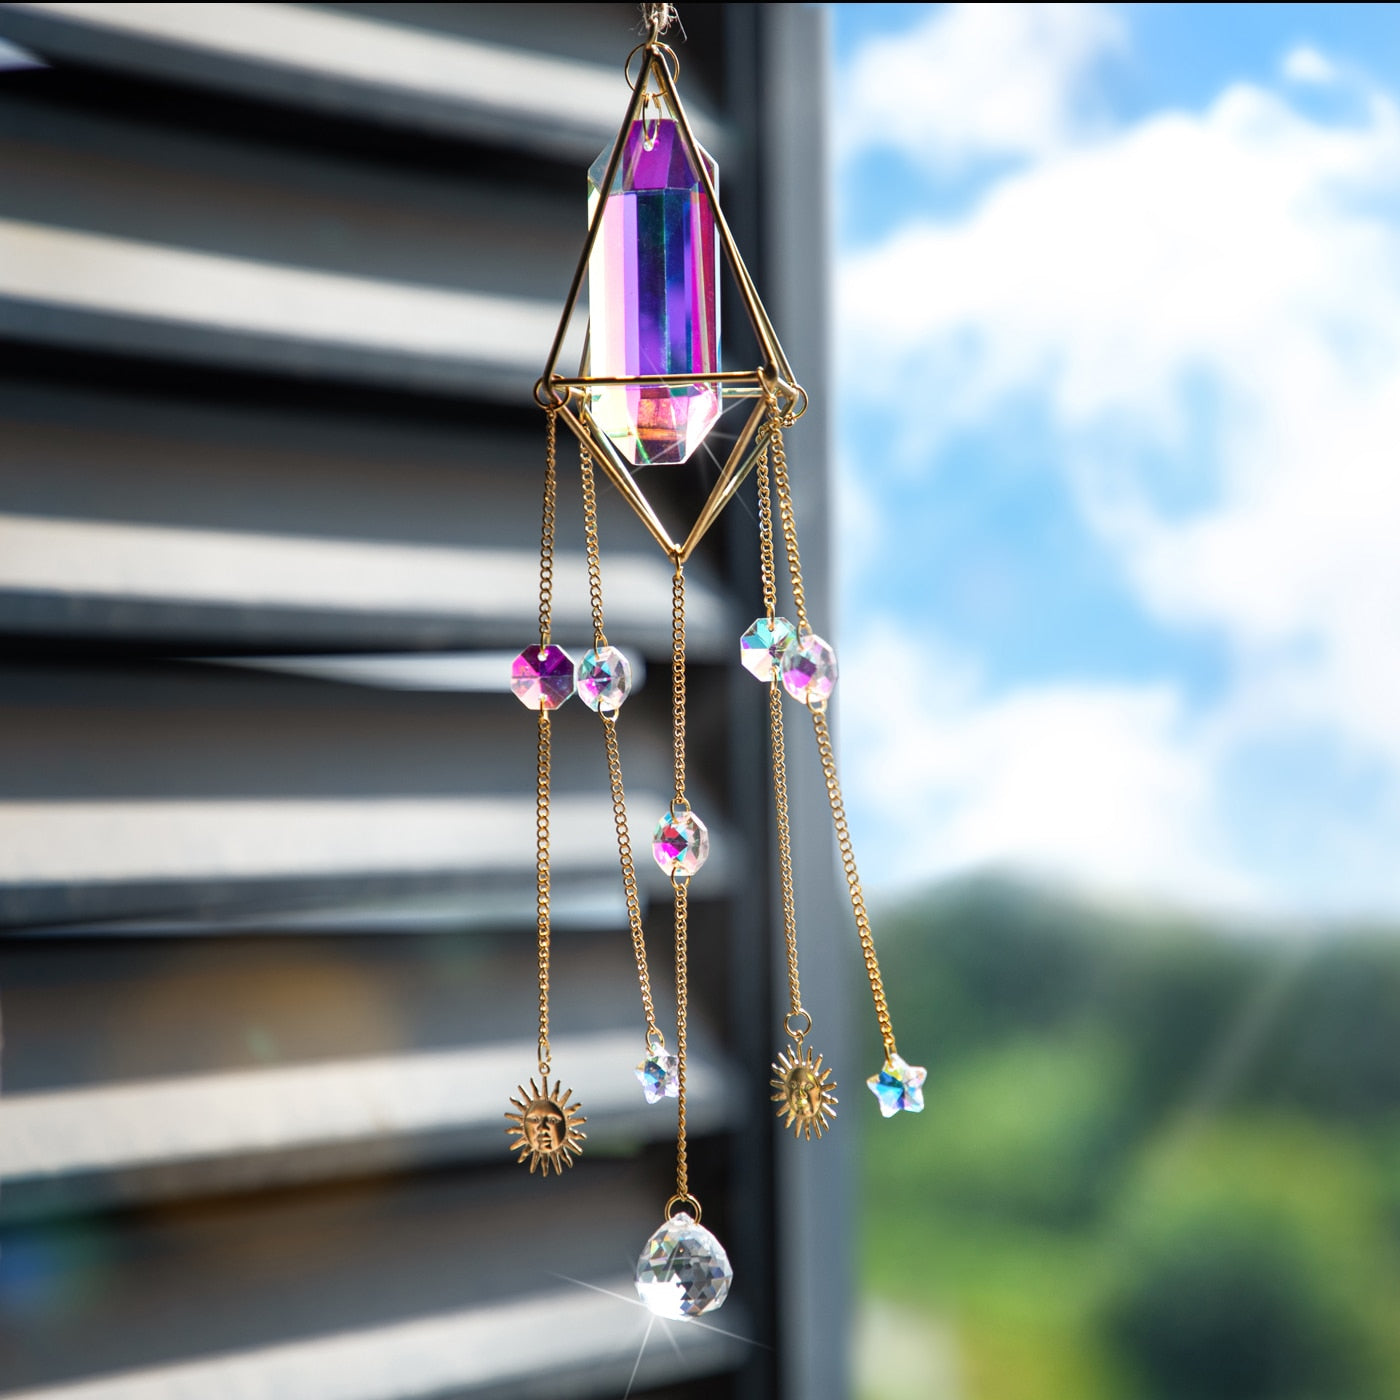 5 Styles Window Suncatchers with Crystal Ball Prisms